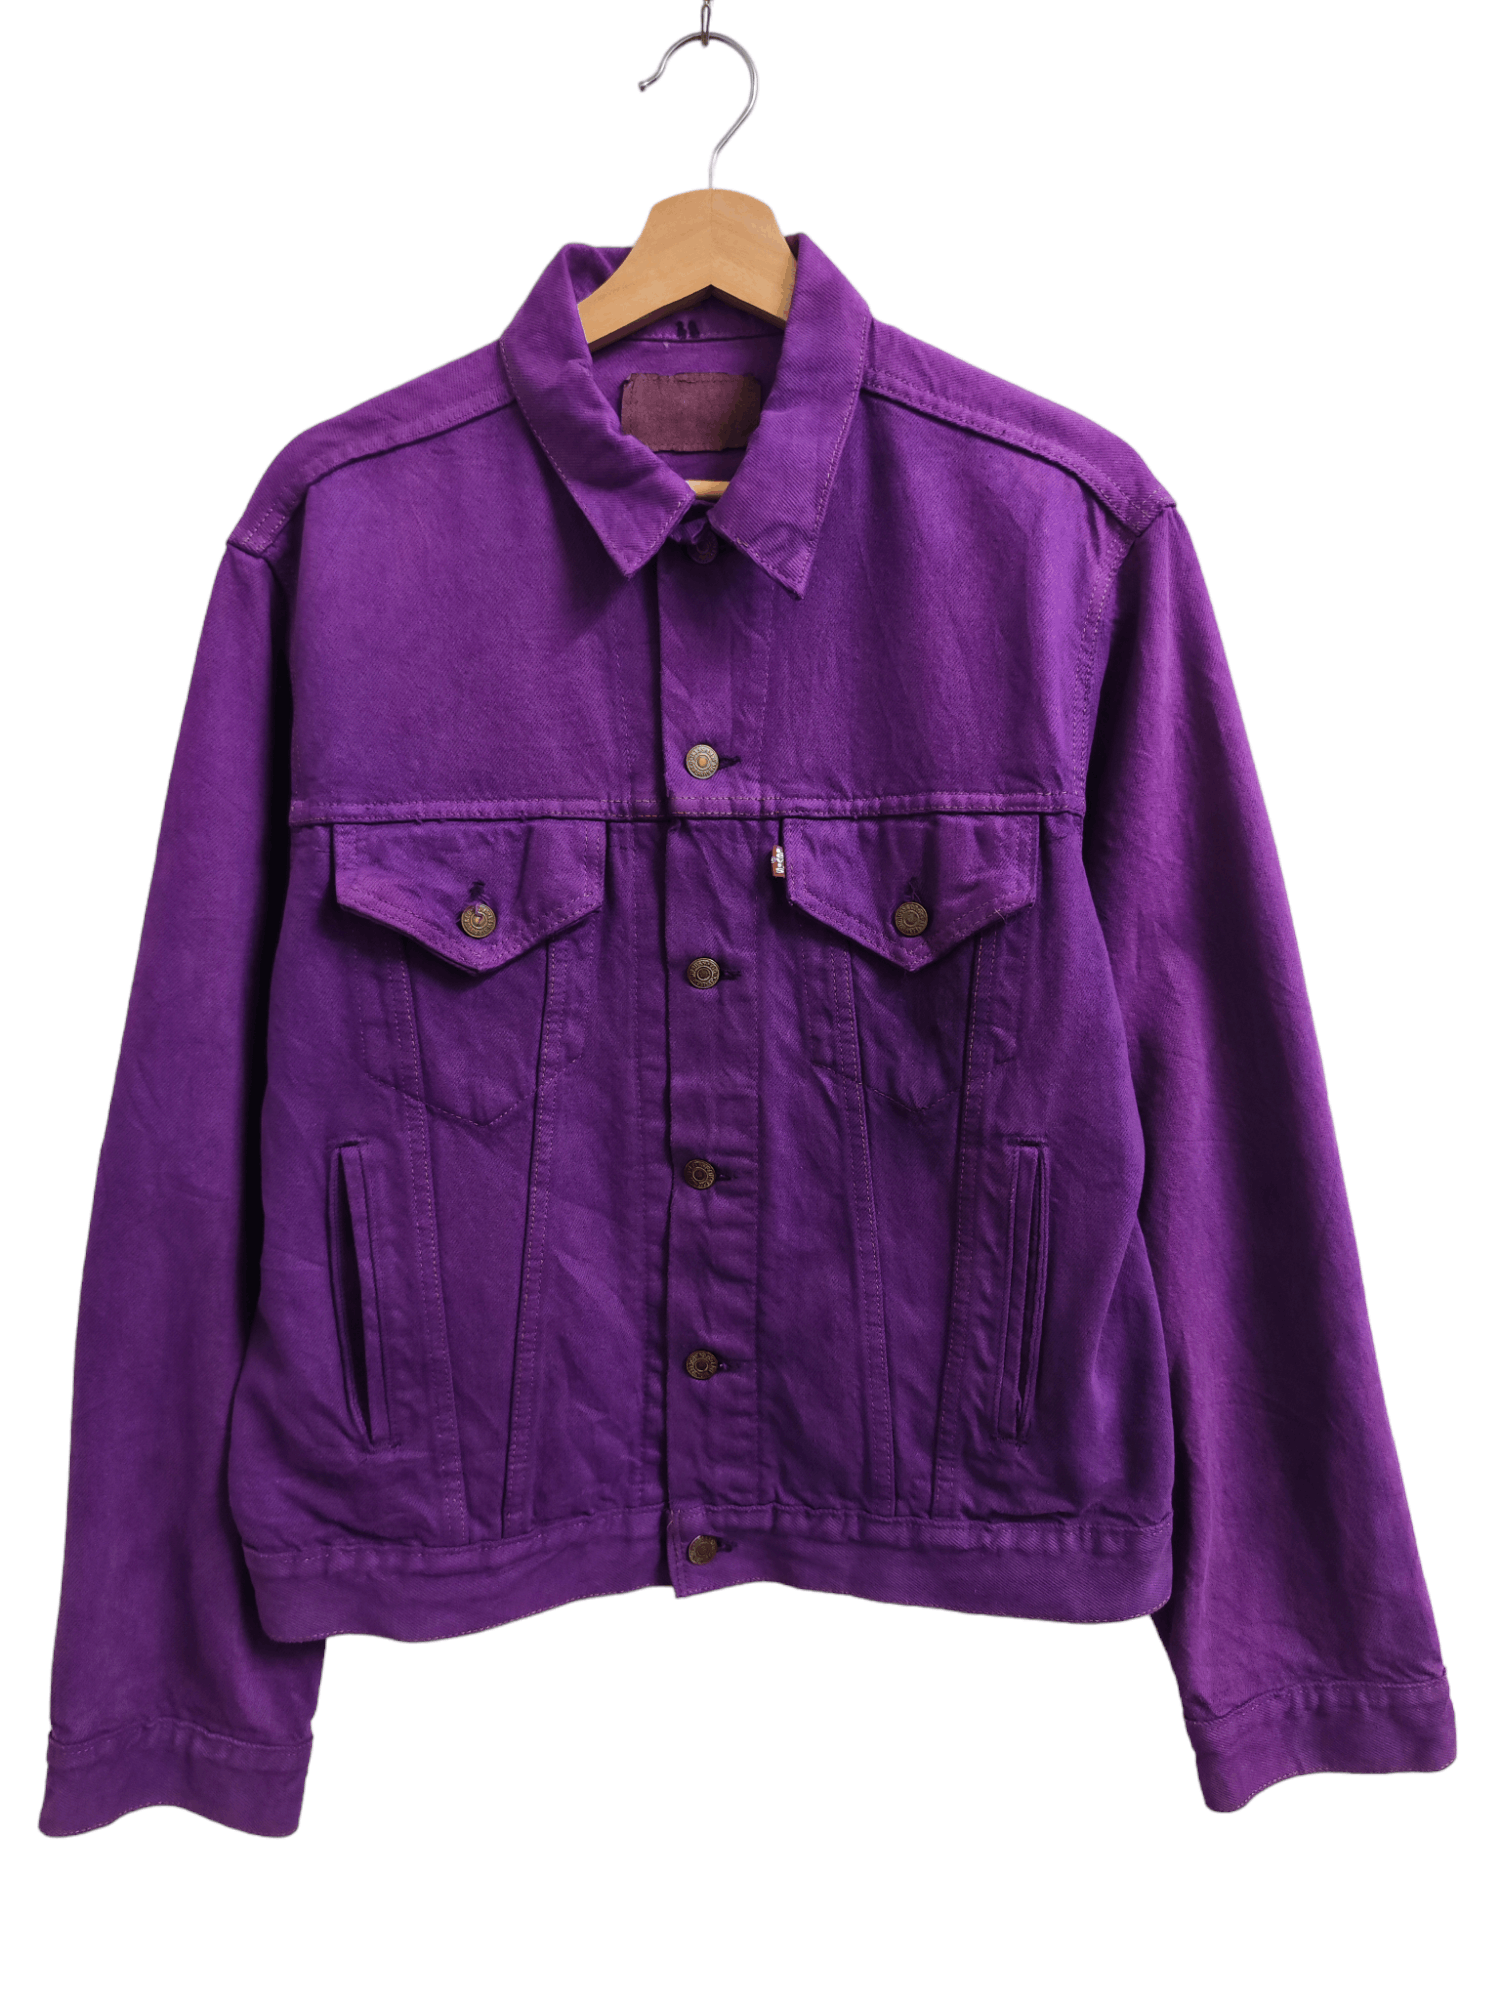 Vintage Vintage Levis Jacket